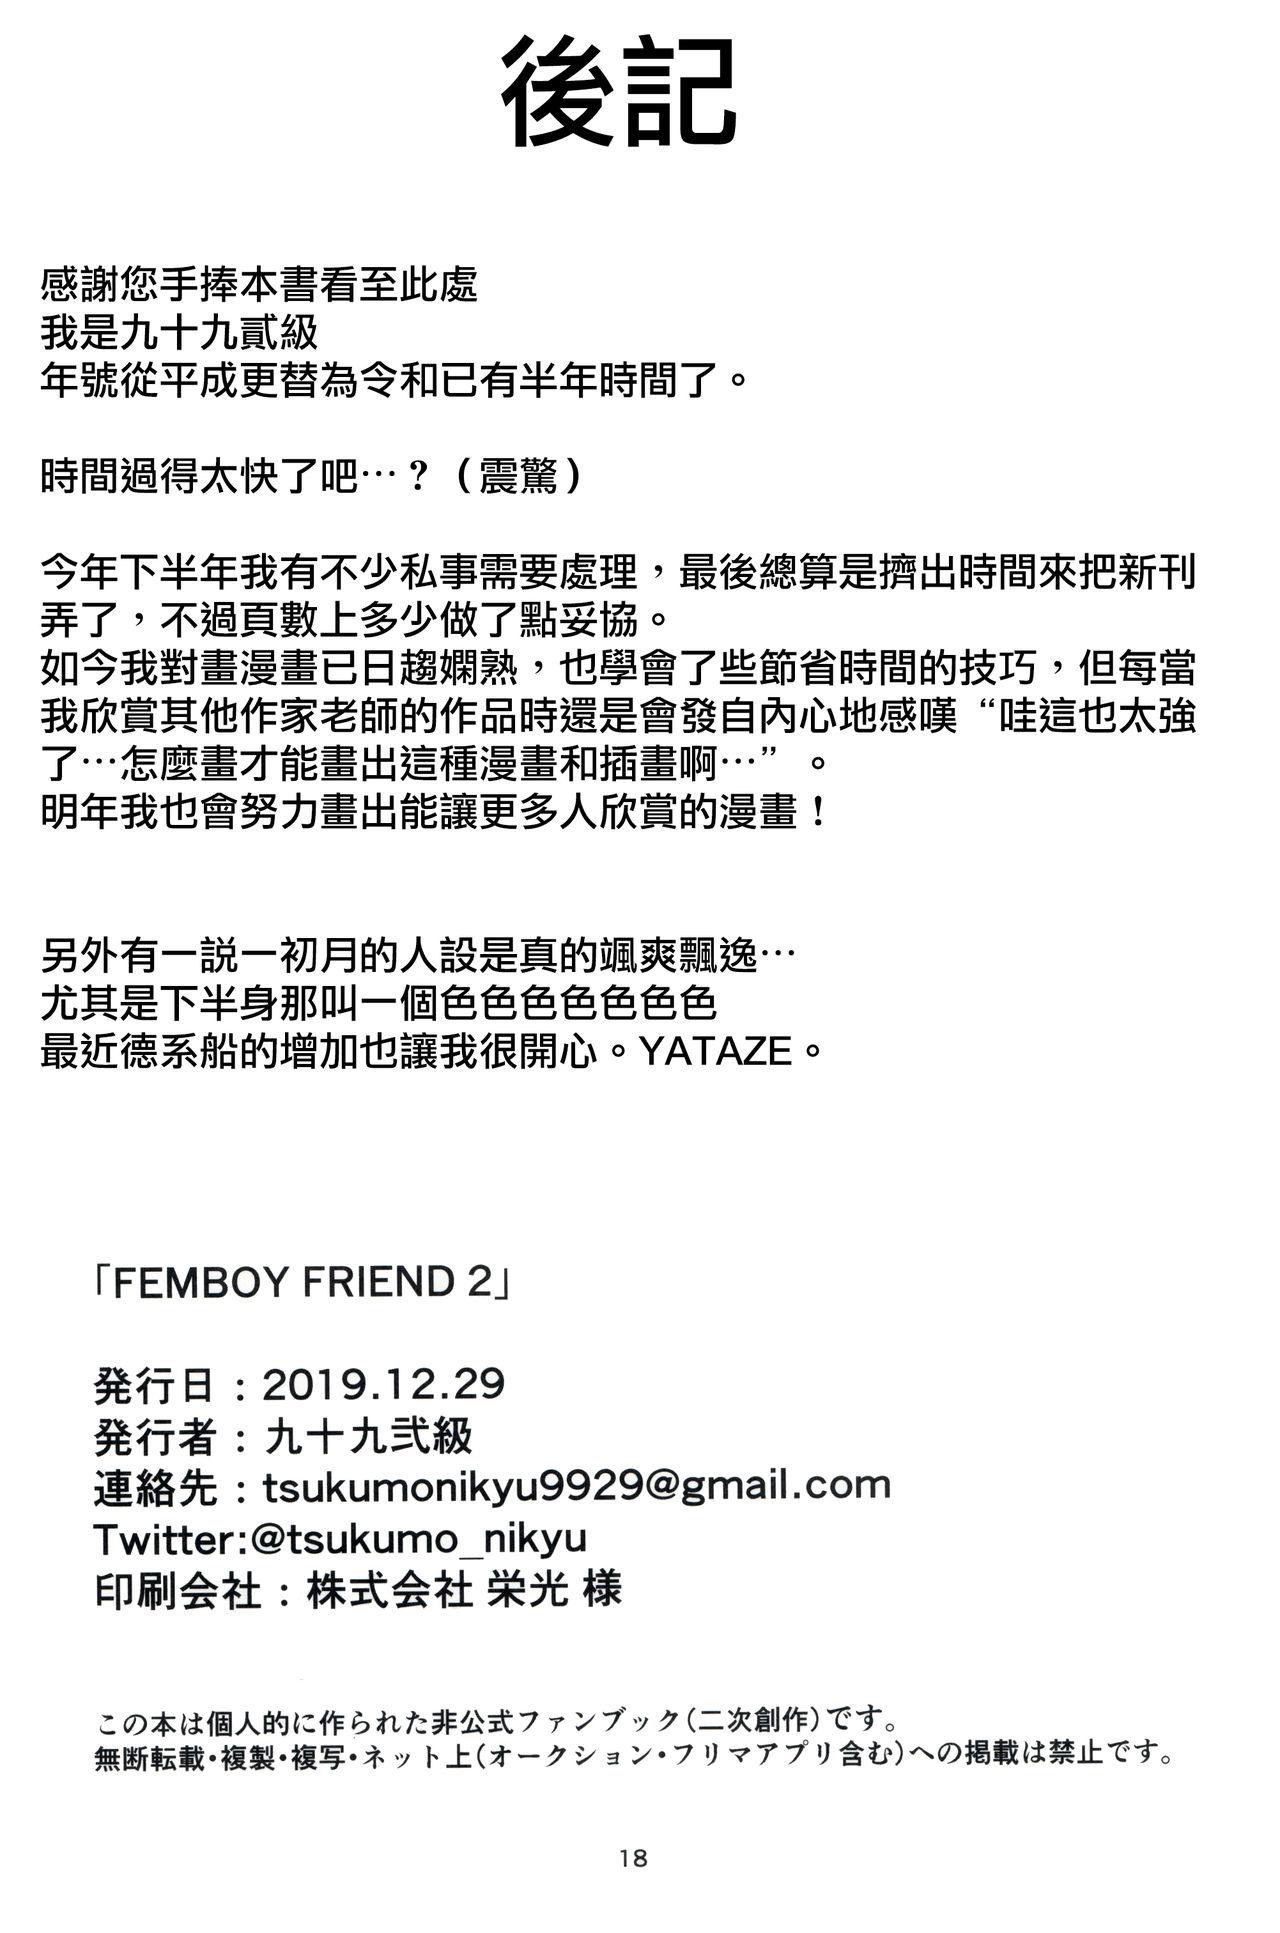 FEMBOY FRIEND 2 17